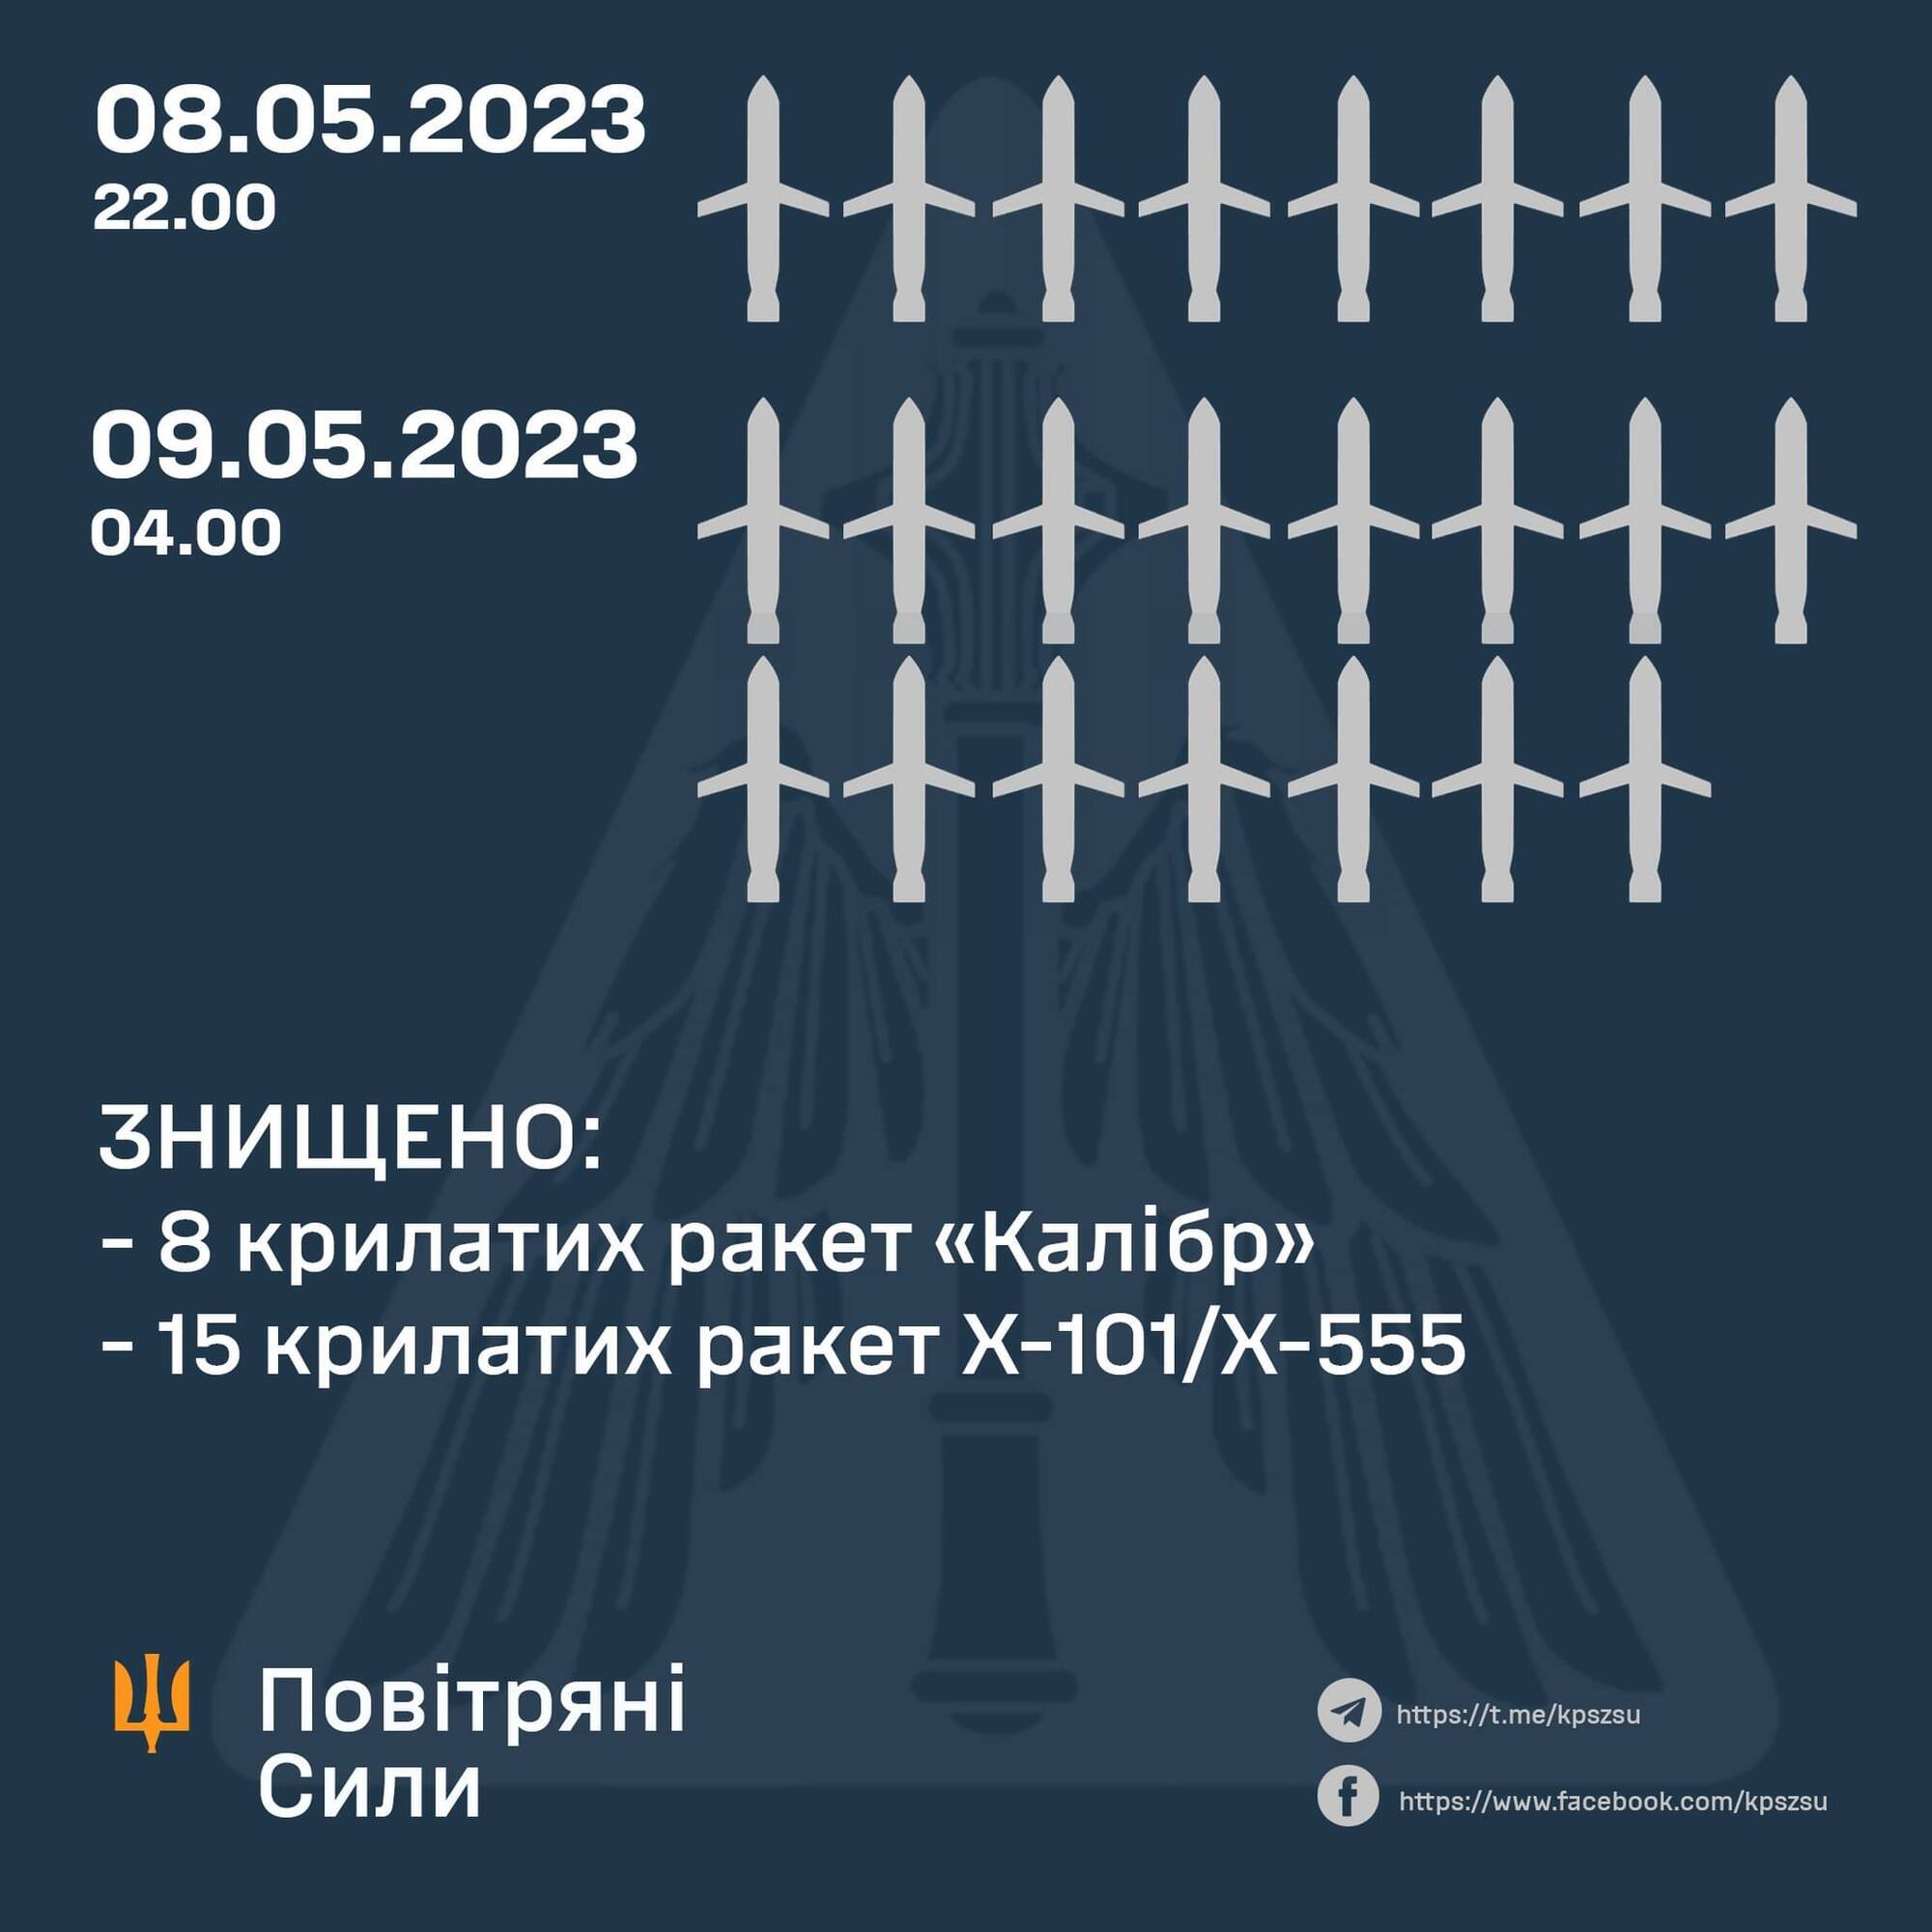 Росія запустила по Україні 25 крилатих ракет, 23 збили сили ППО